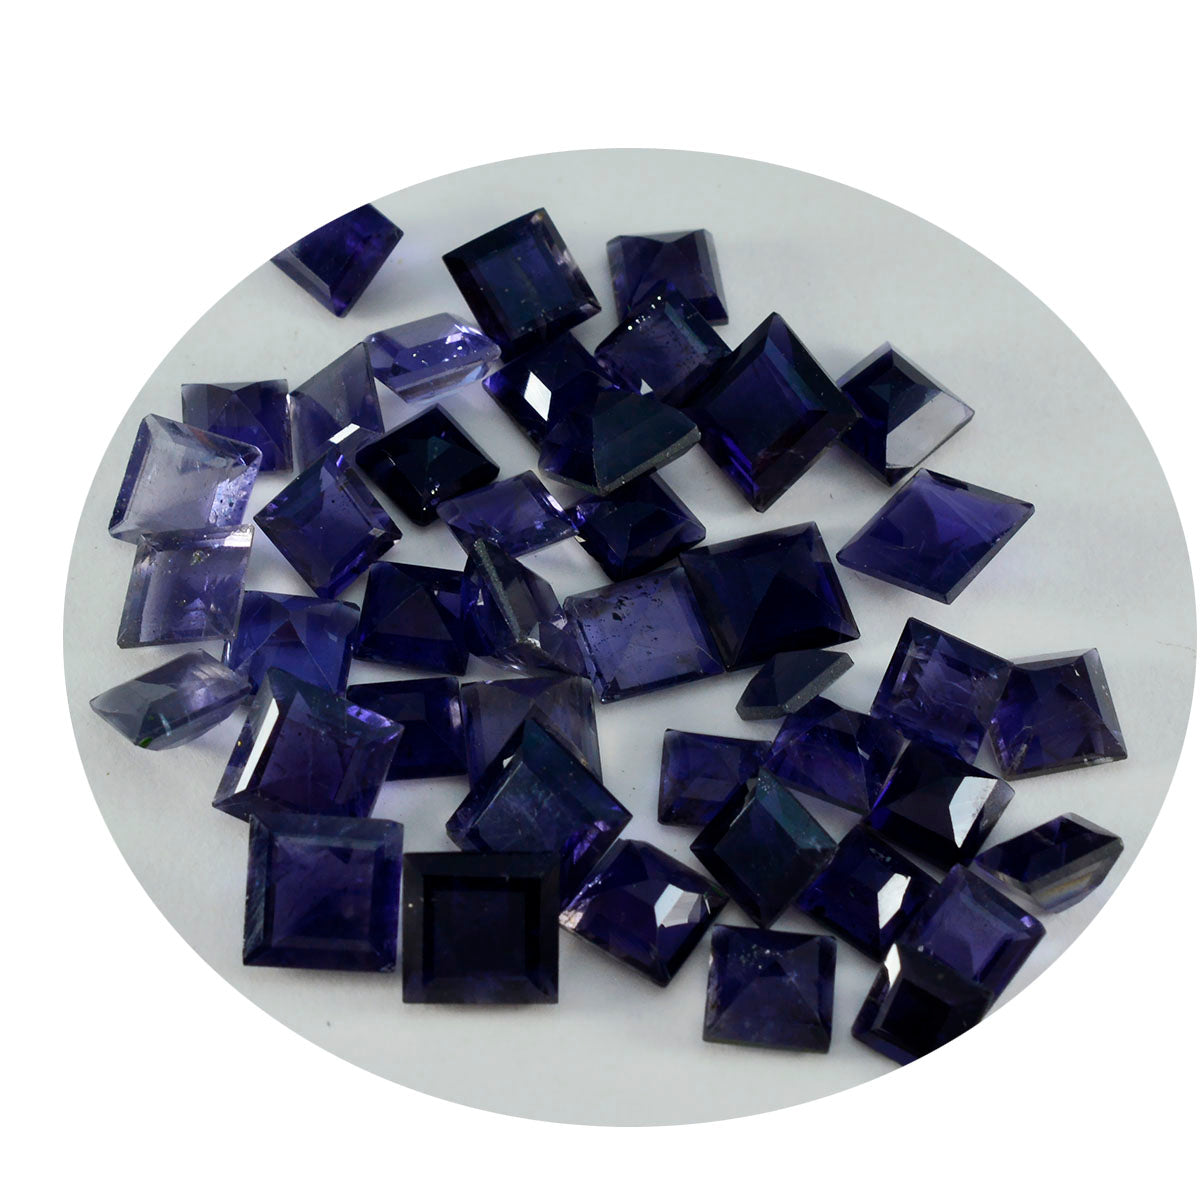 Riyogems 1PC Blue Iolite Faceted 8x8 mm Square Shape A+1 Quality Loose Gem